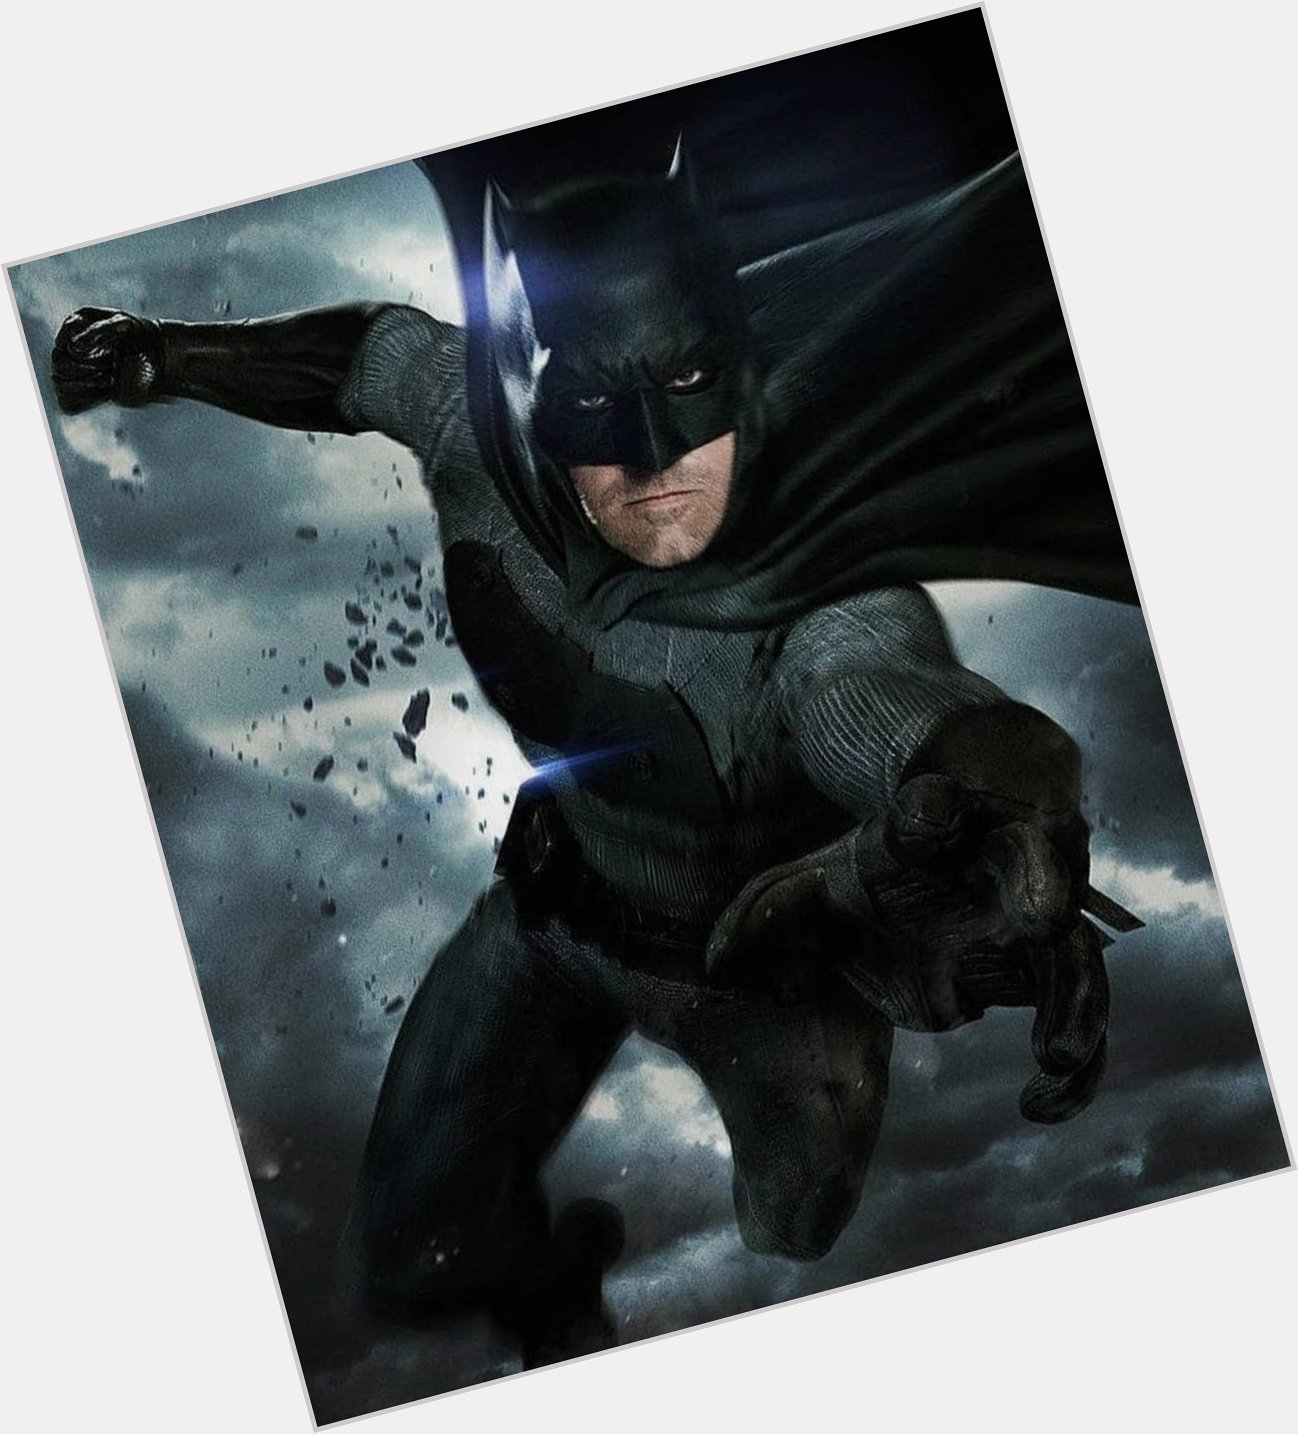  Happy birthday Ben Affleck, The best Batman ever 